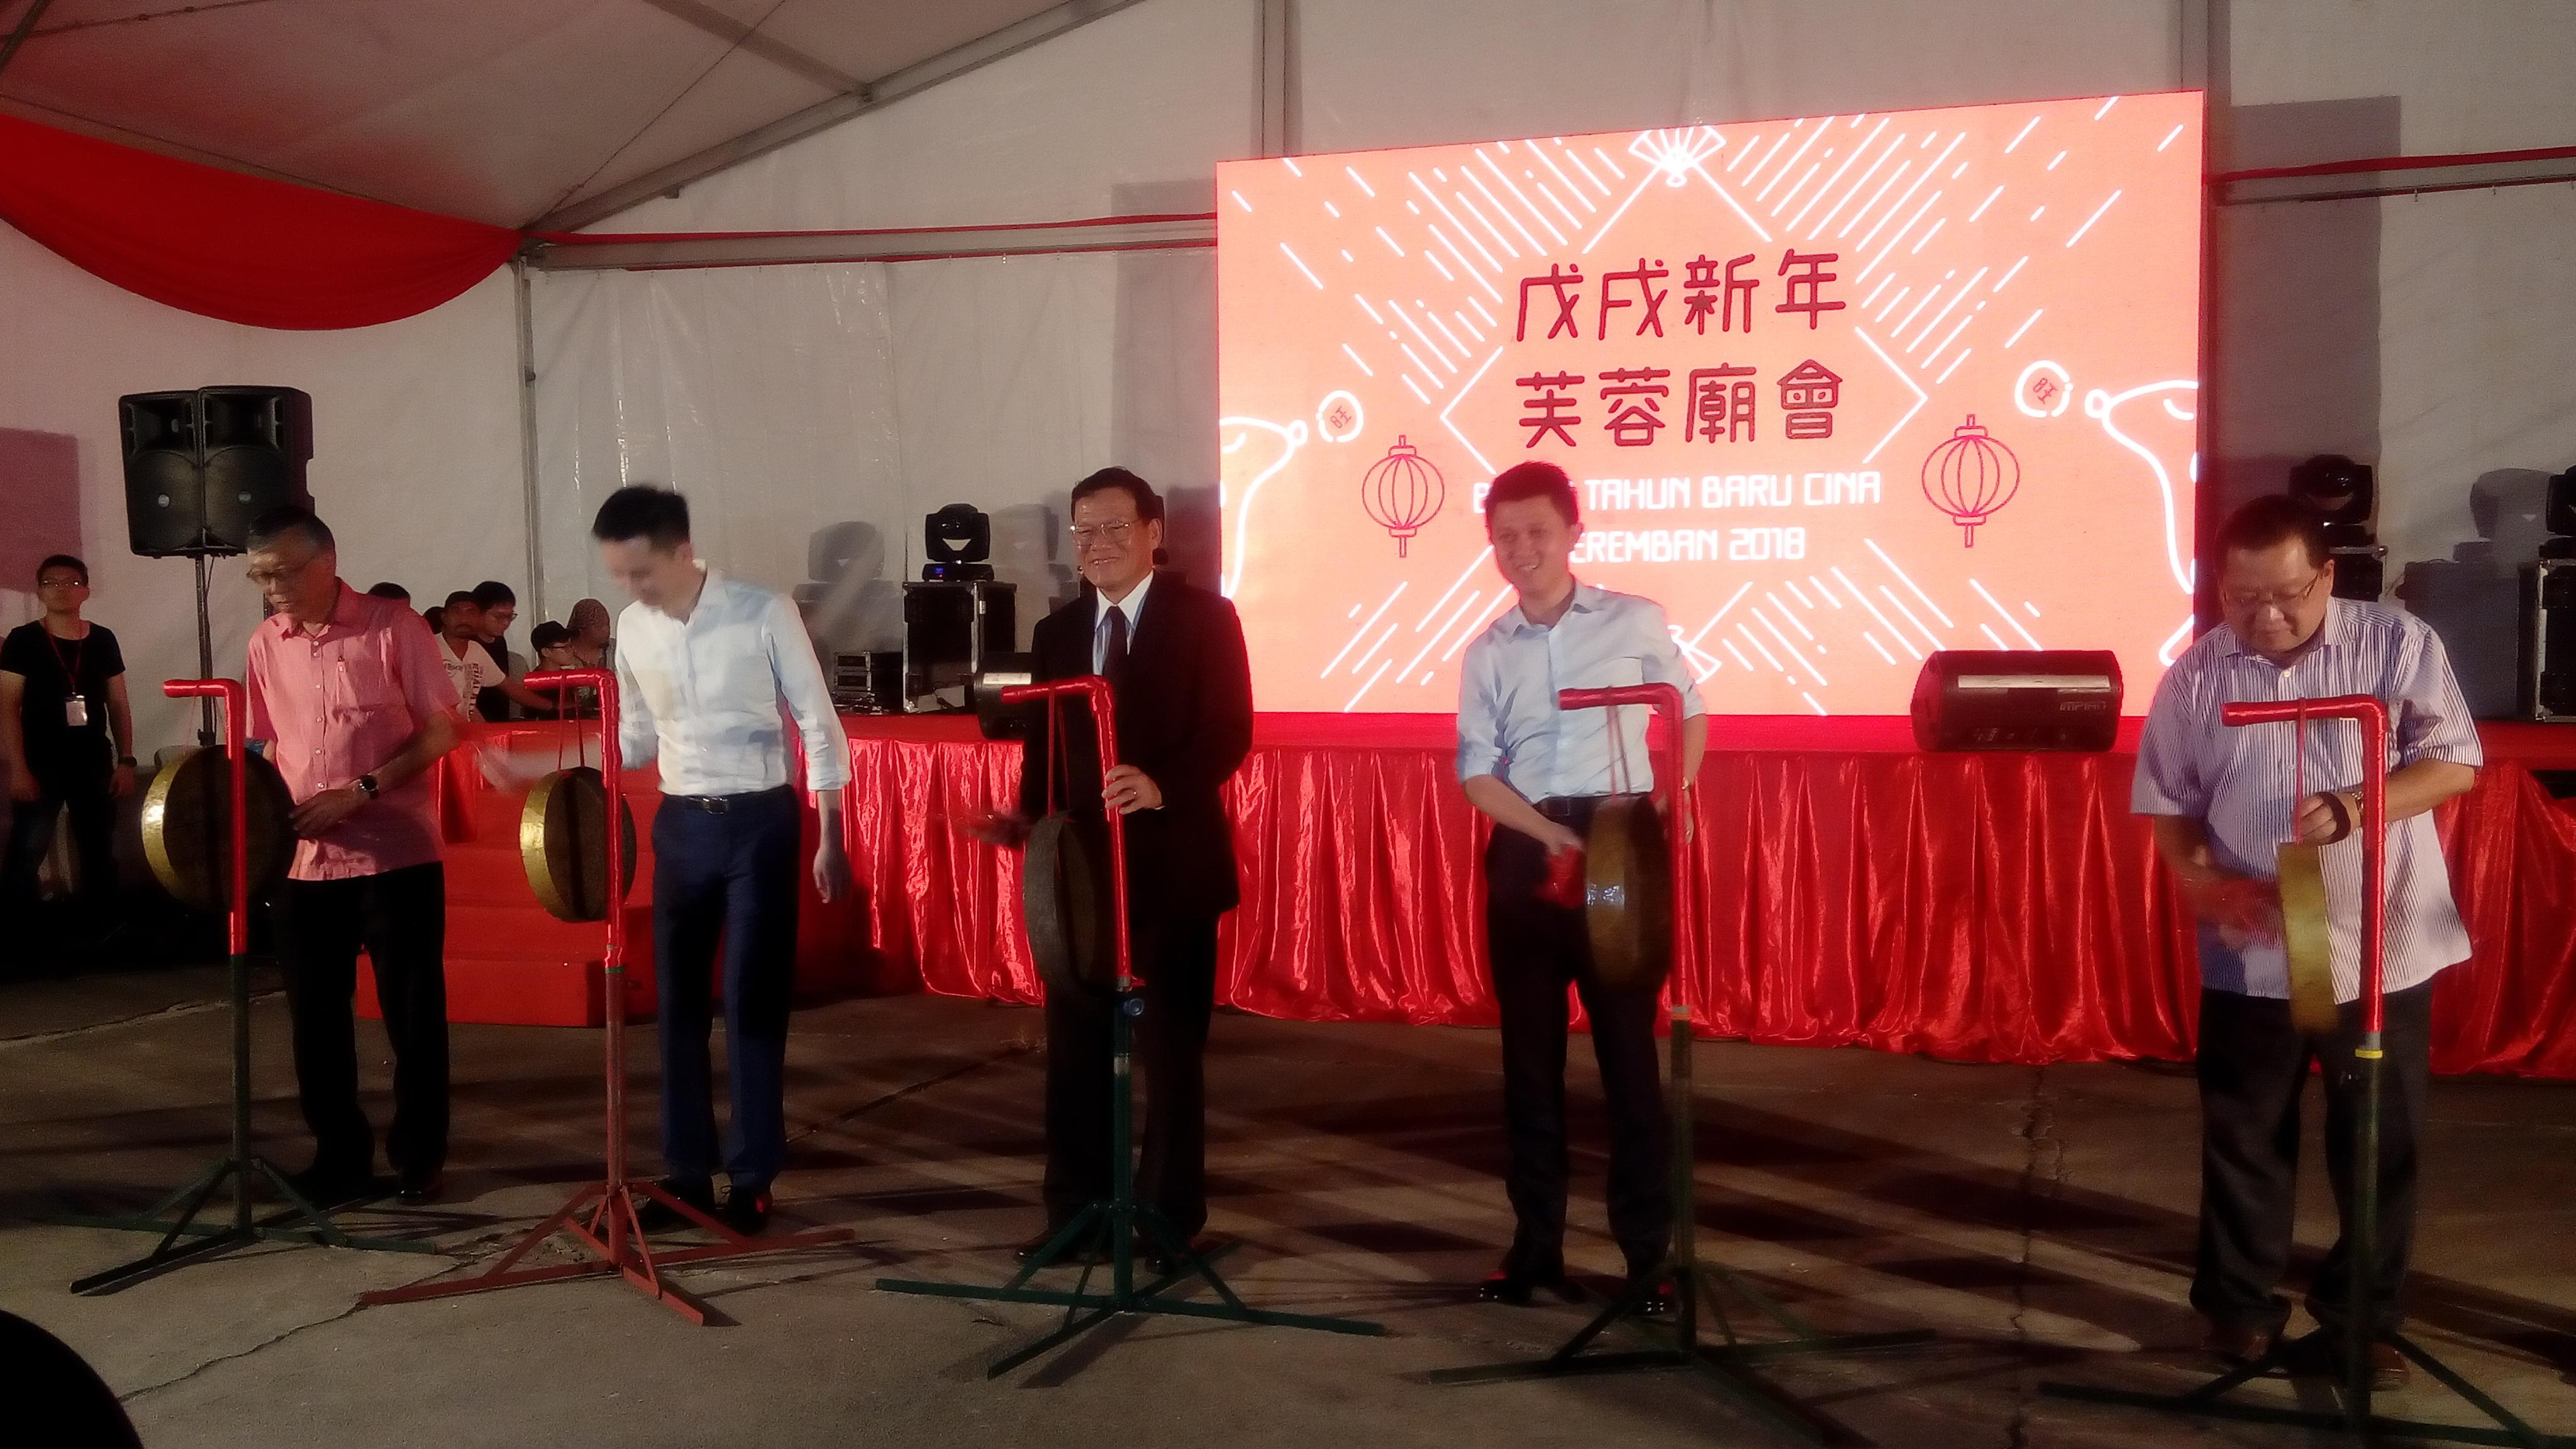 Representative Chang, James Chi-ping and YB Senator Tuan Chong Sin Woon with VIP for 2018 new Year Seremban Temple Fair Opening ceremony tap gong.